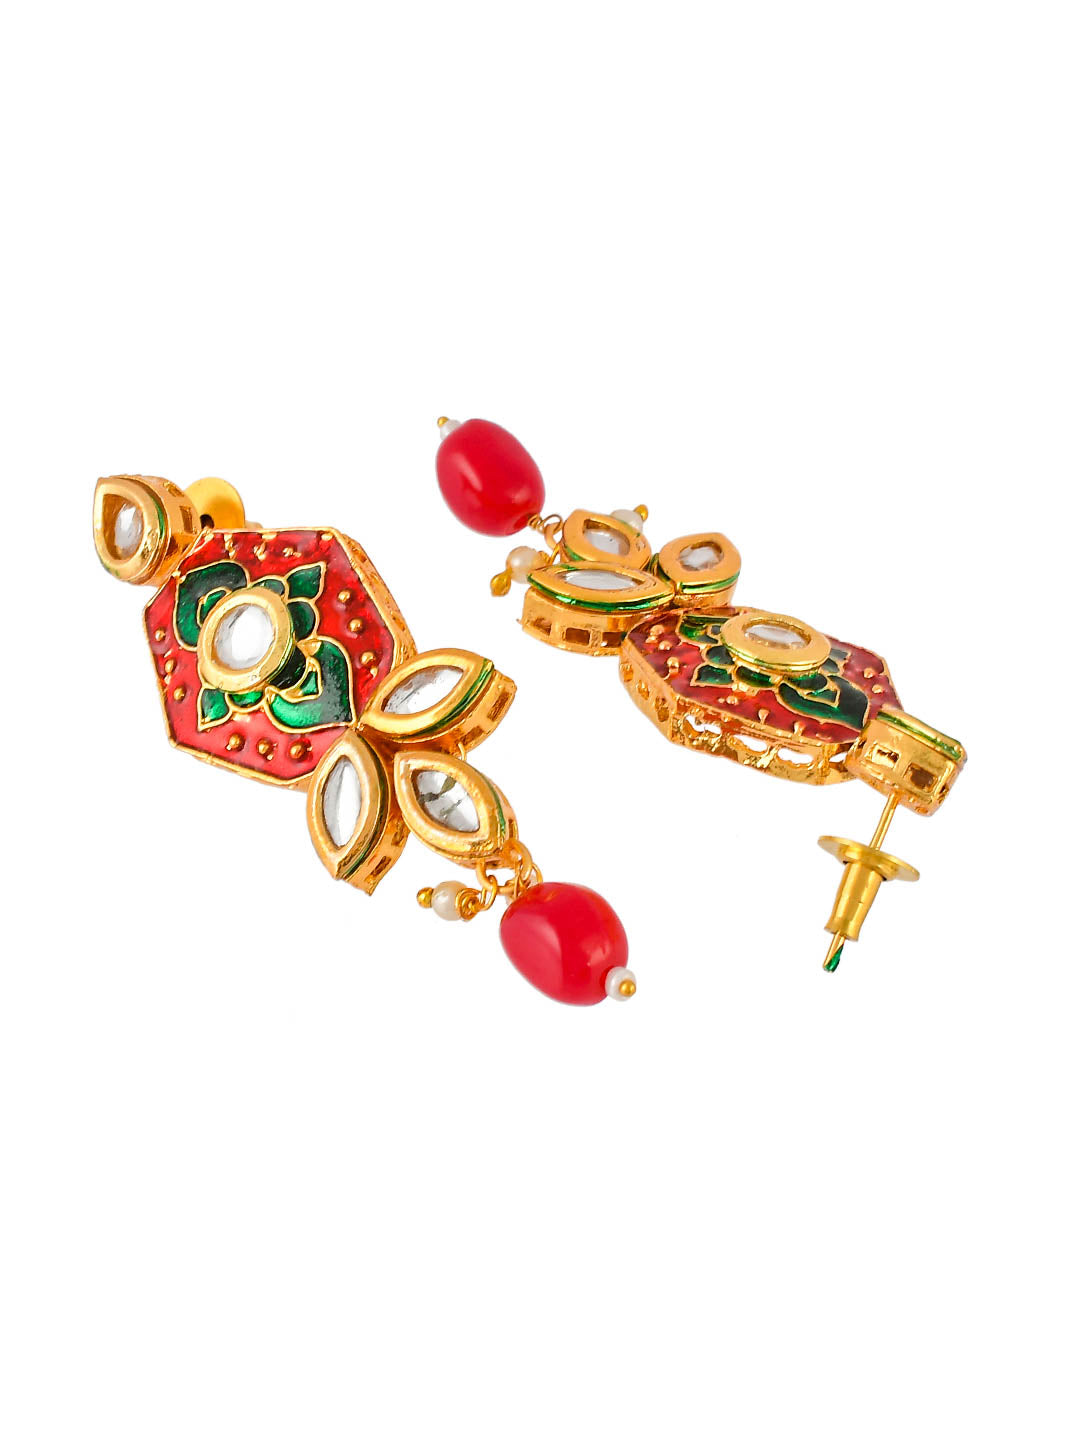 Red Kundan Meenakari Rajwadi Jewellery Set